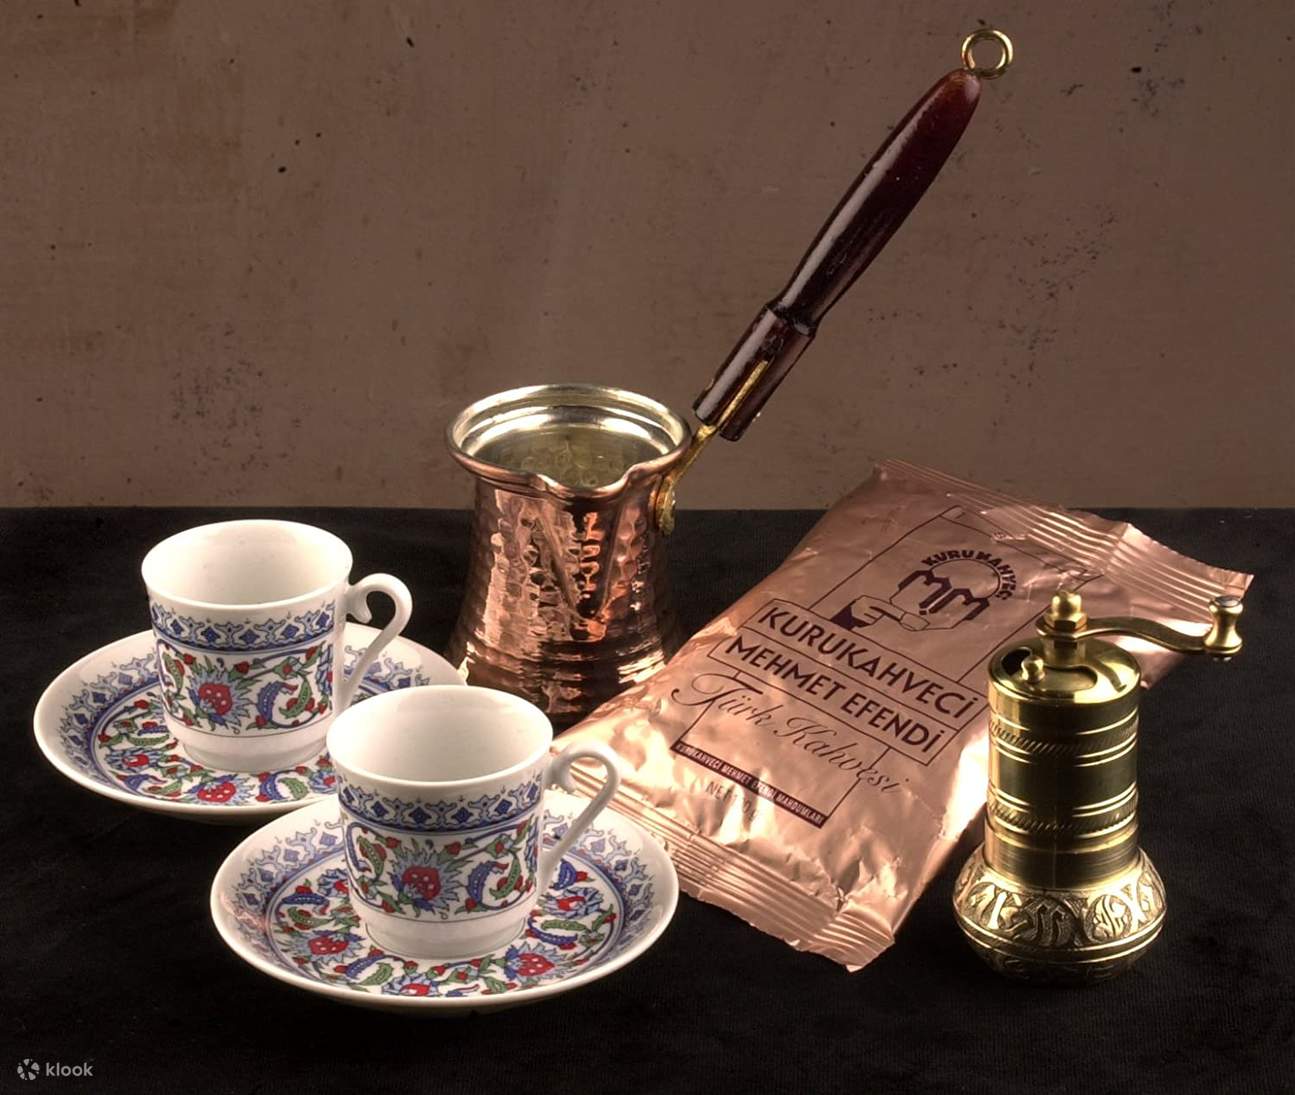 Cafetera Turca Cobre y Café Turco Mehmet Efendi 100g. Kurukahveci